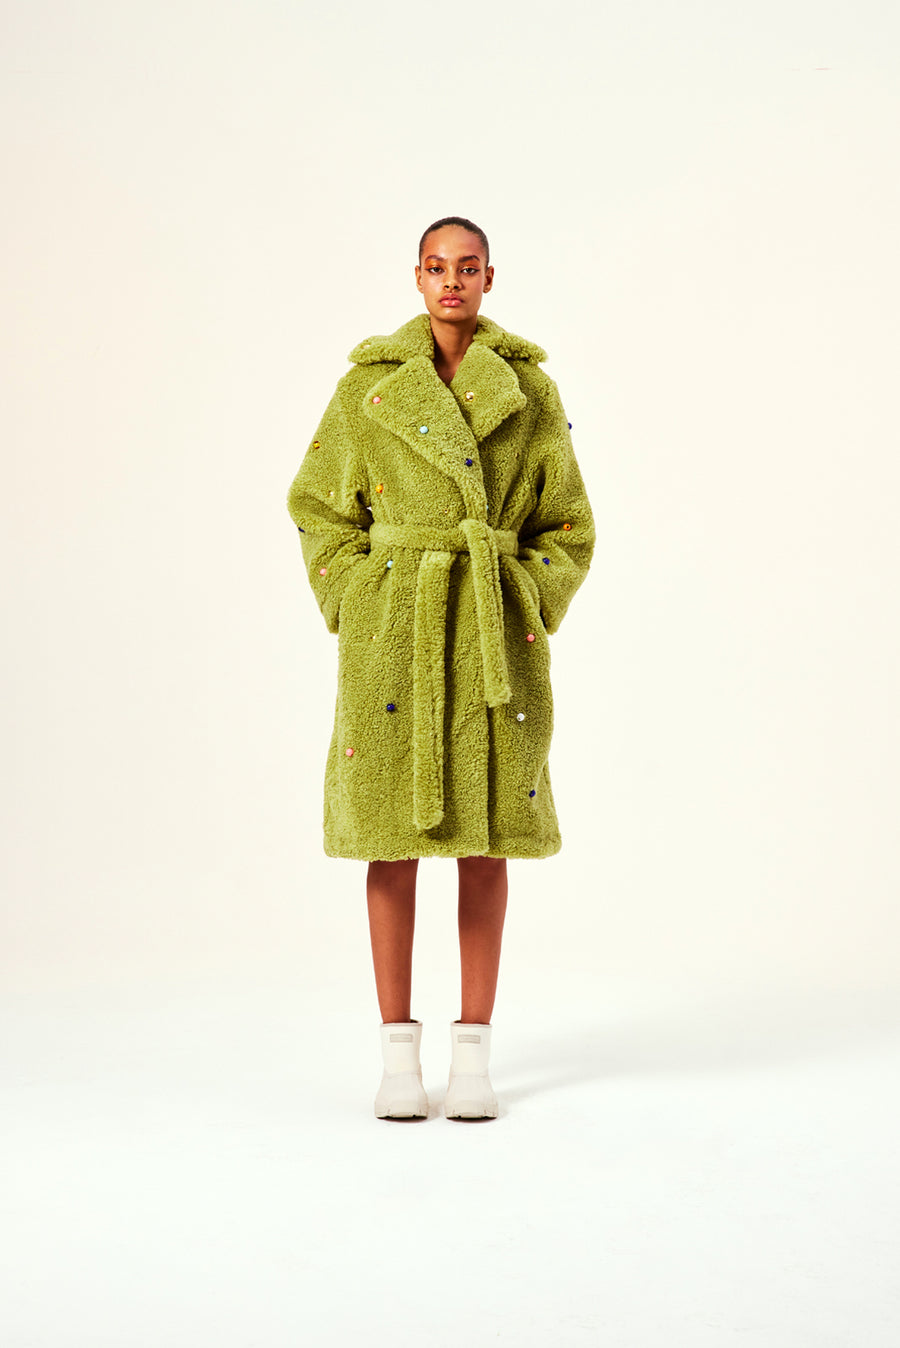 ROMY - Multicolor beaded faux fur coat